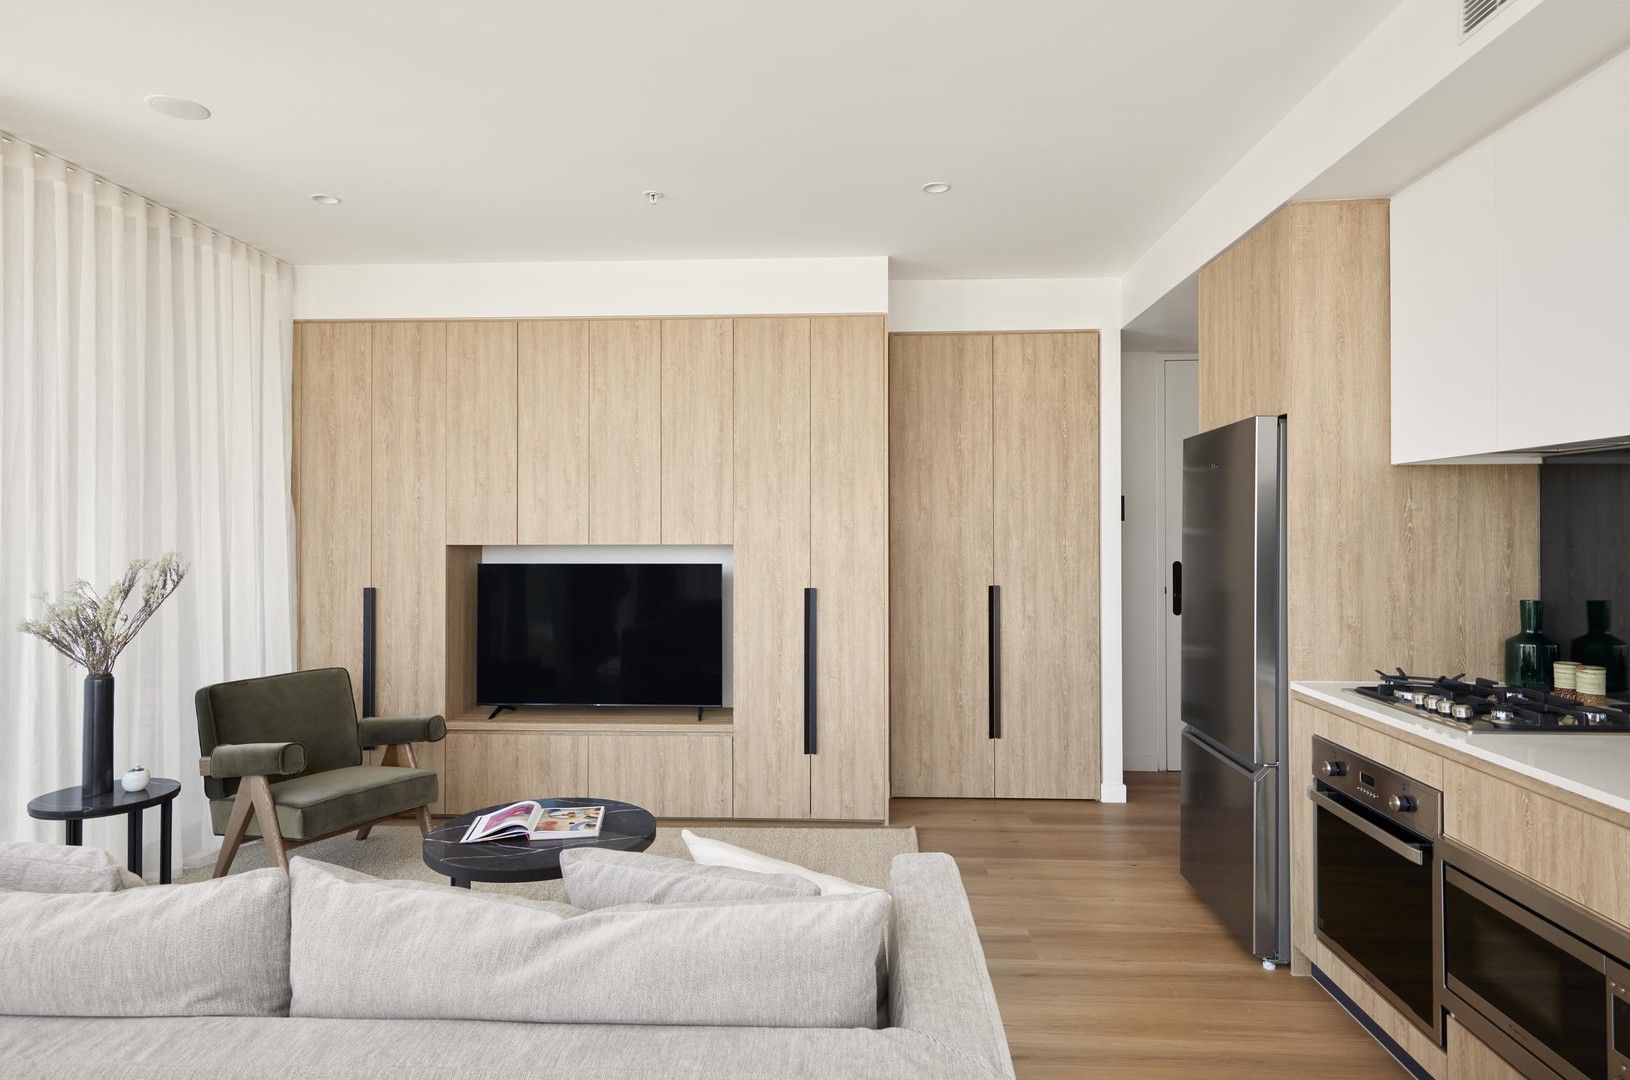 1 bedrooms Apartment / Unit / Flat in Parkes Street HARRIS PARK NSW, 2150